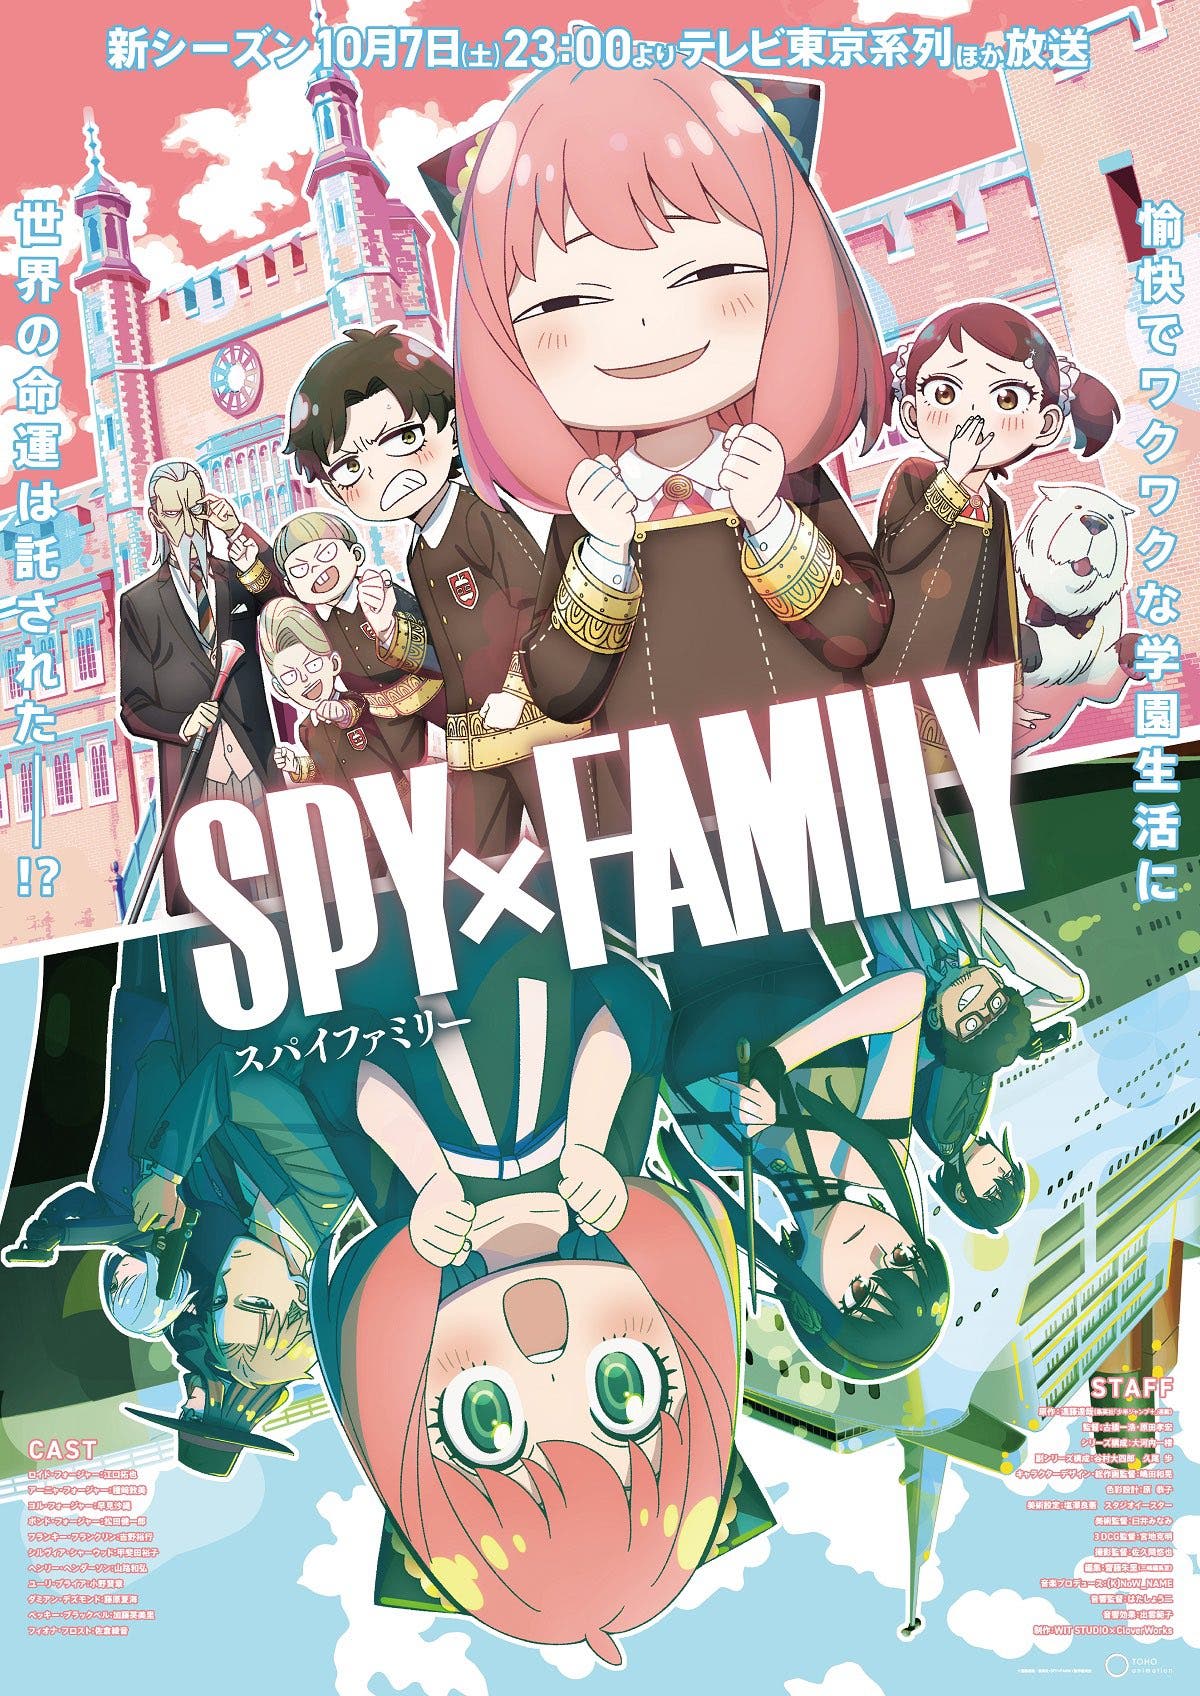 Spy x Family revela un primer vistazo al episodio 1 de la segunda temporada